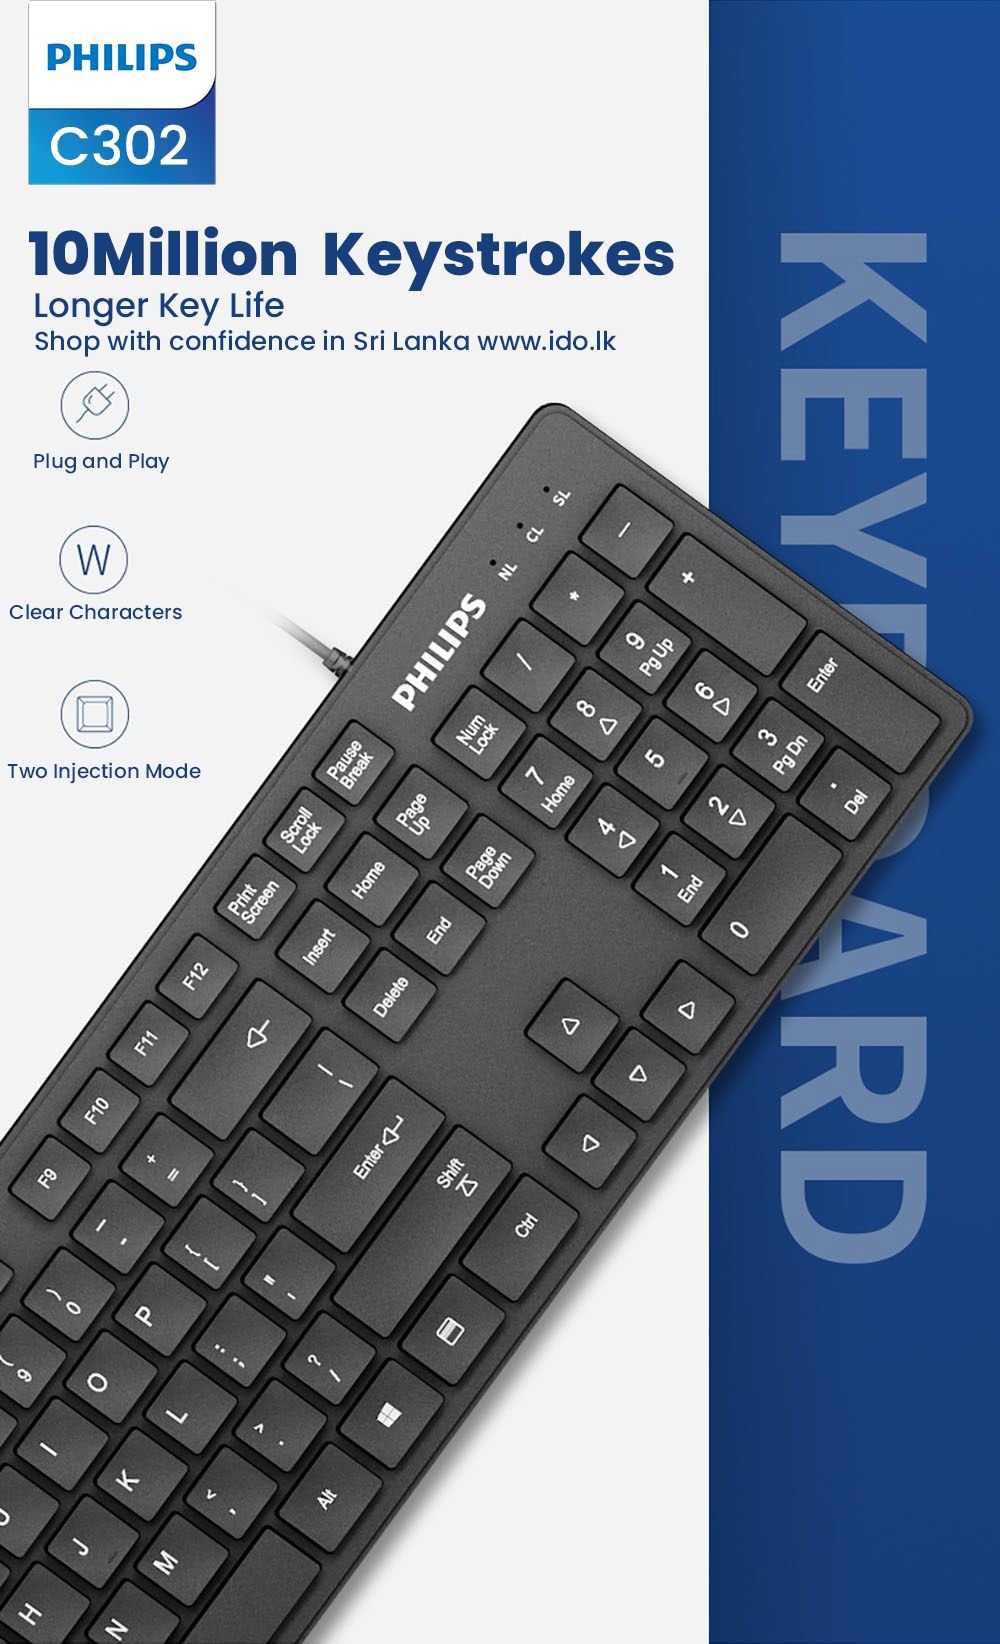 Philips USB Wired Keyboard in Sri Lanka from ido.lk K302